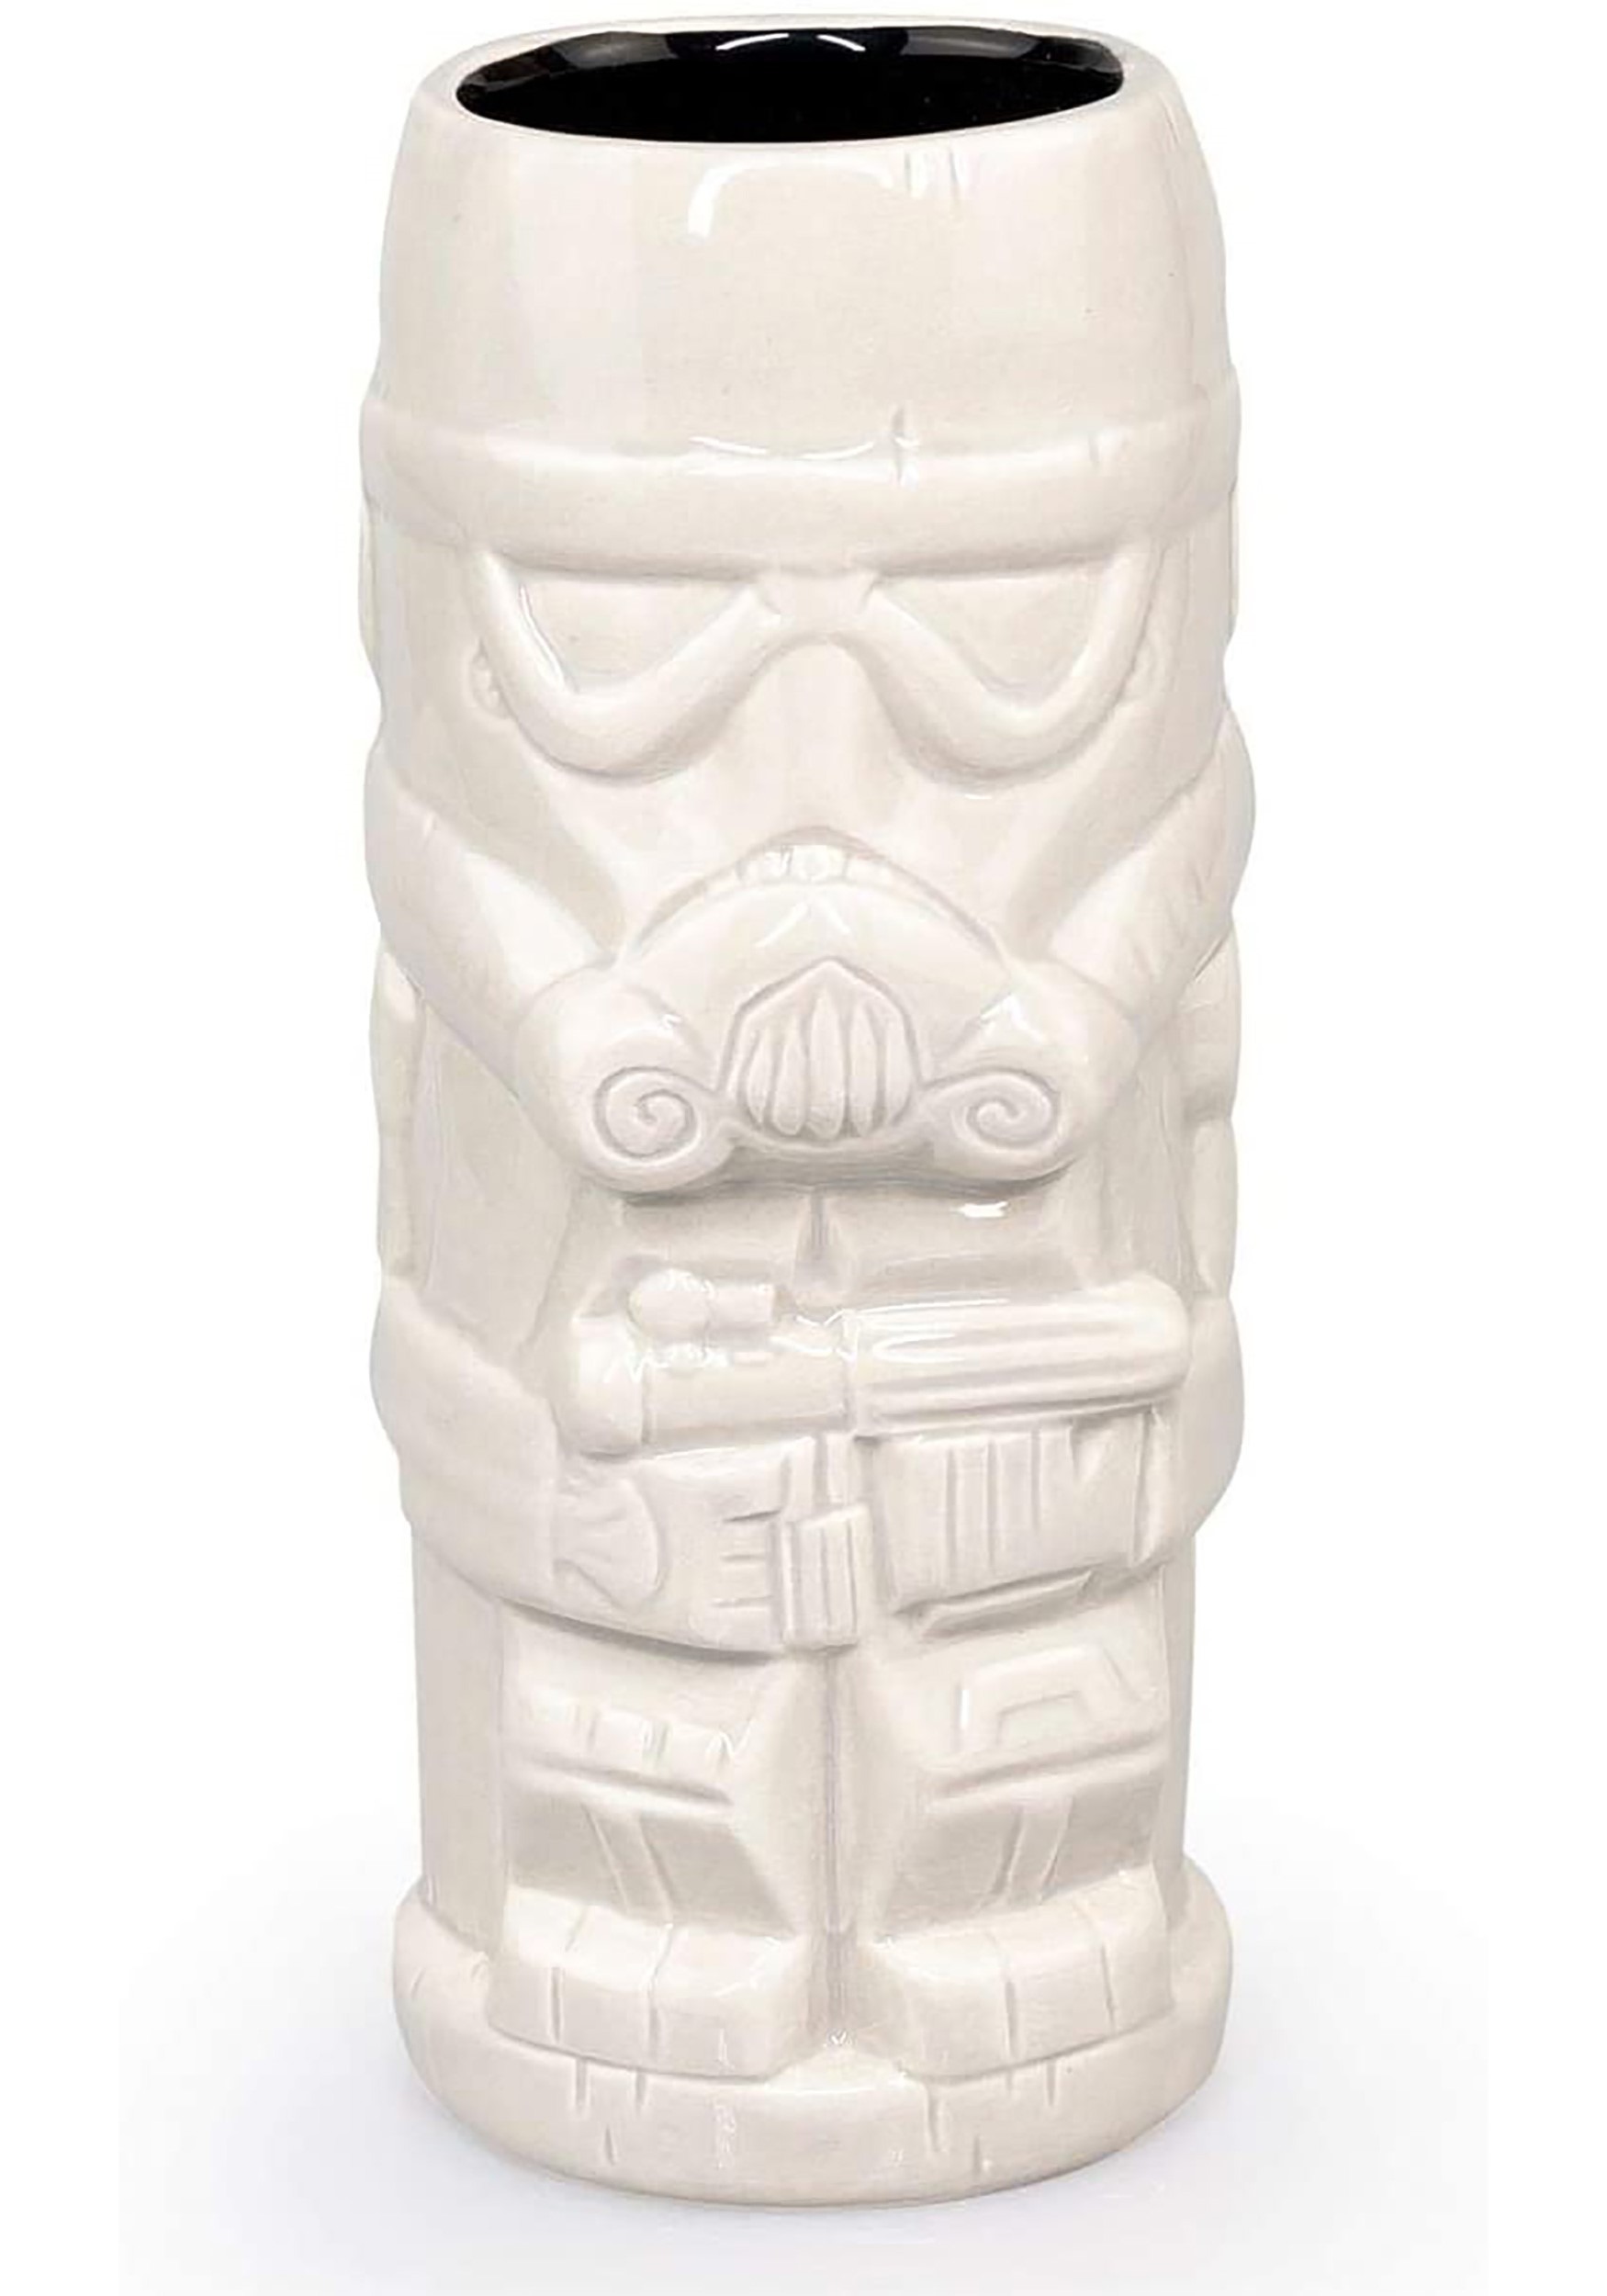 Details about   Geeki Tikis Star Wars Storm Trooper 15 oz Ceramic Tiki Mug NEW IN BOX 